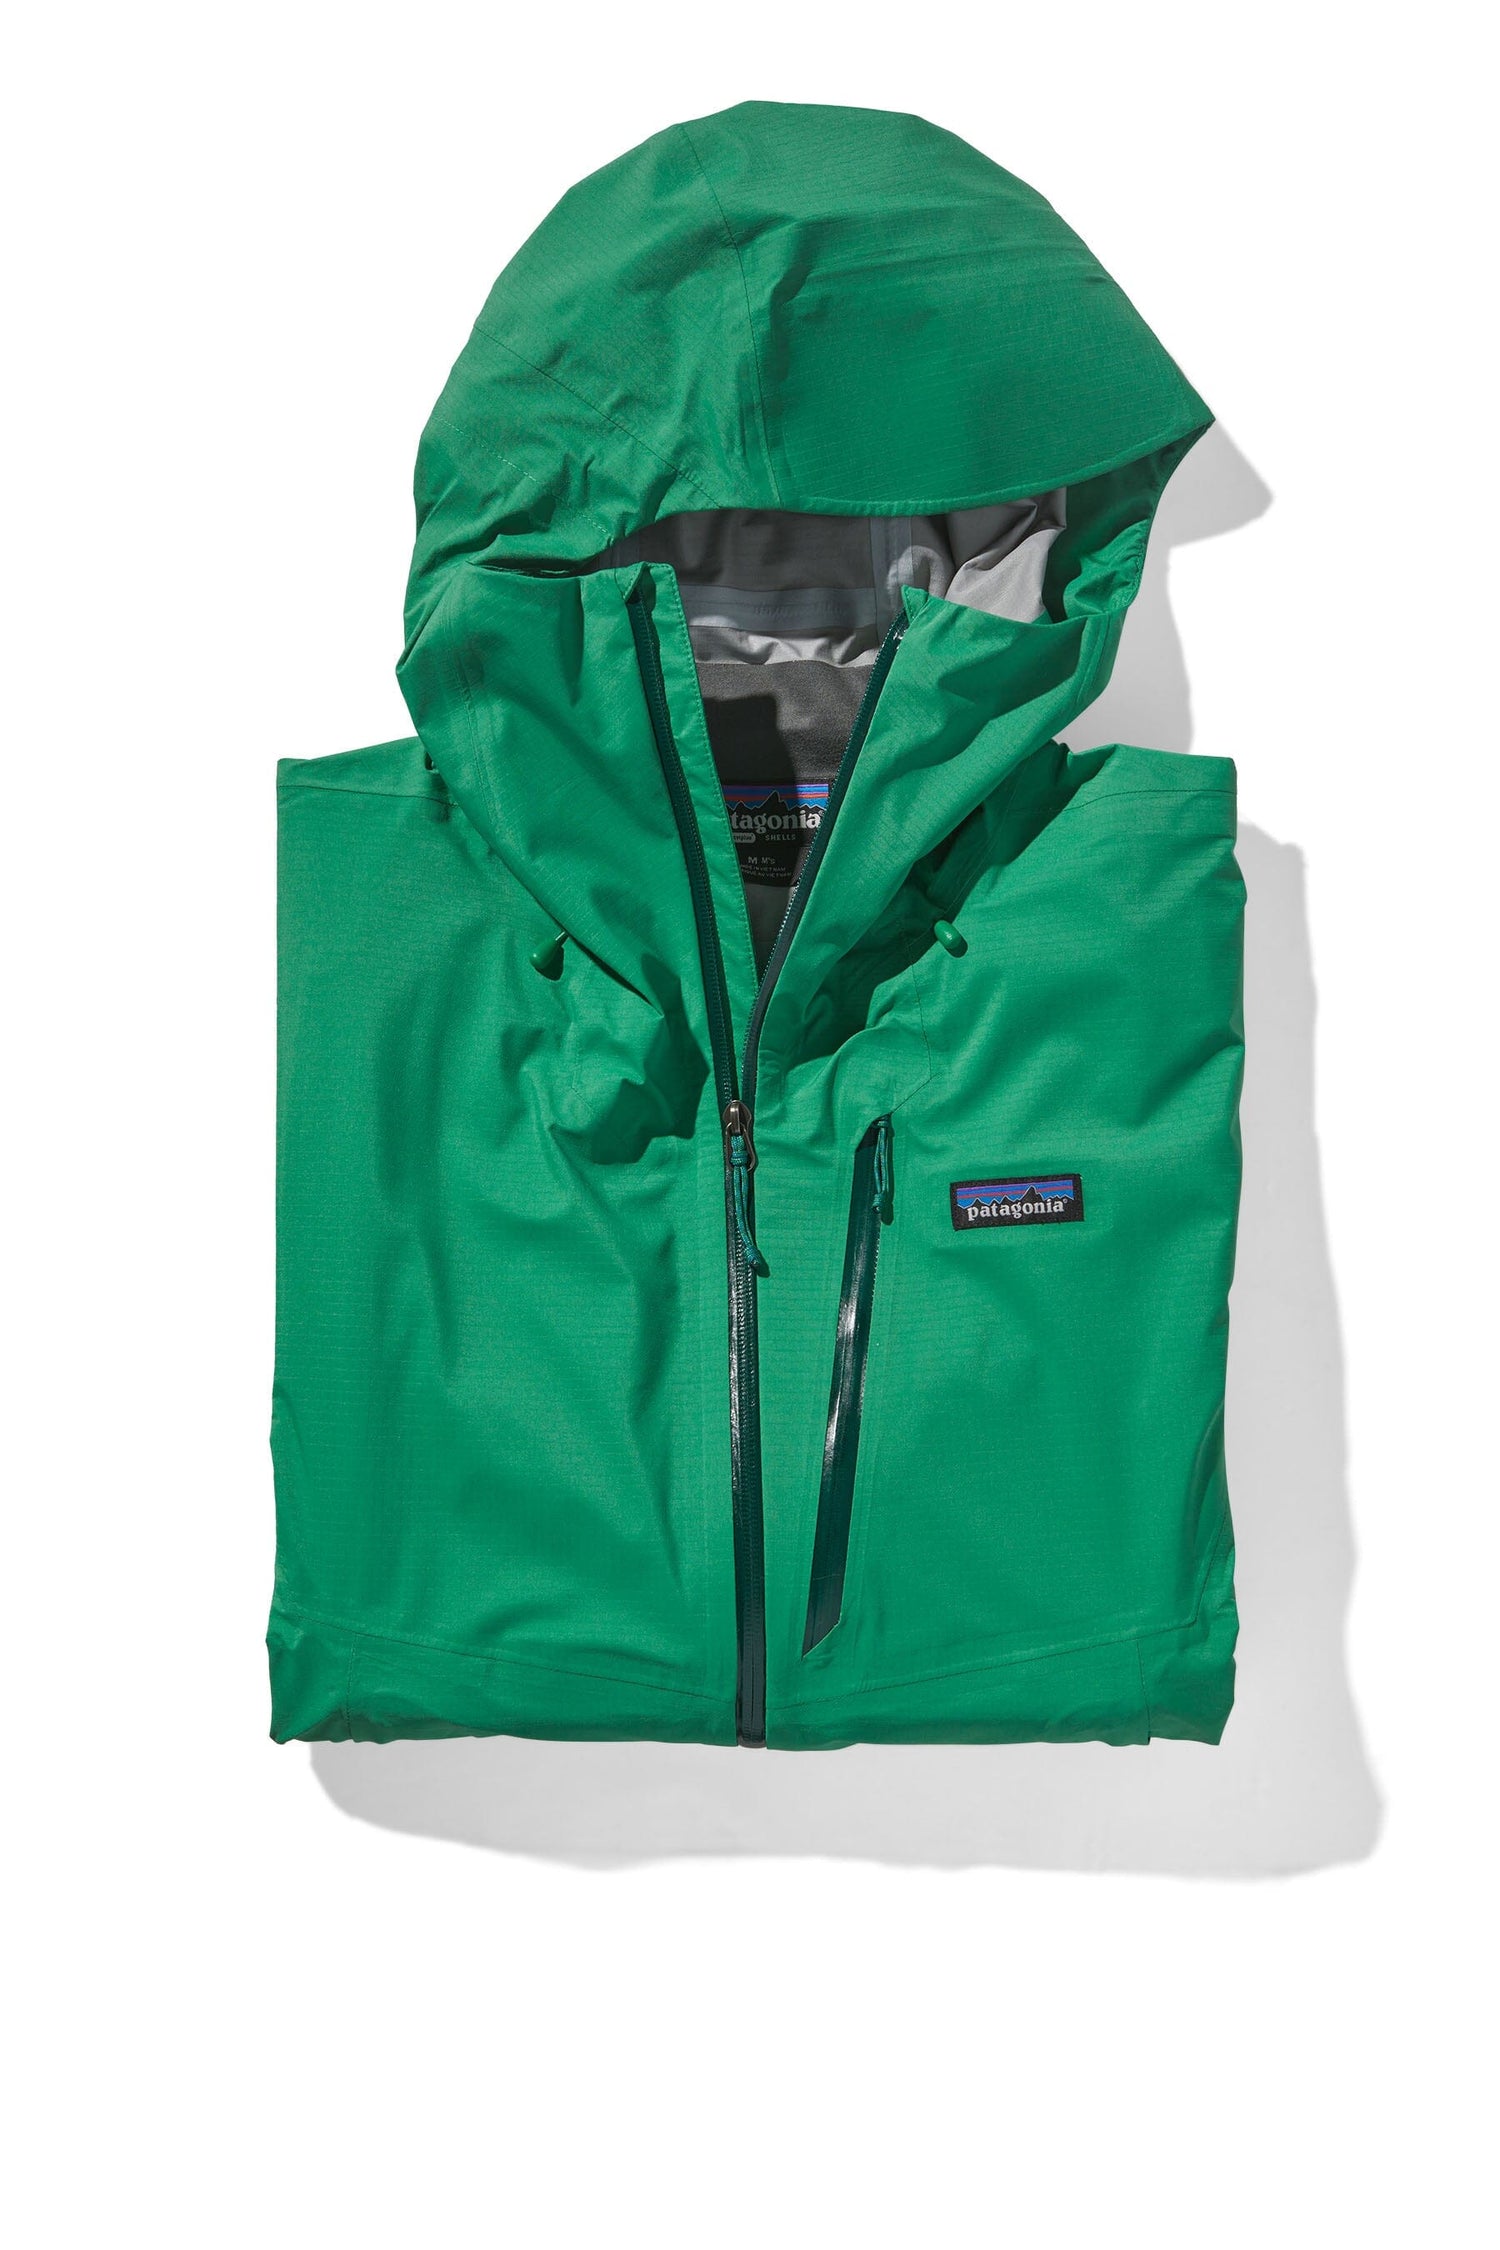 Patagonia M's Granite Crest Shell Jacket - 100% Recycled Nylon Shrub Green Jacket